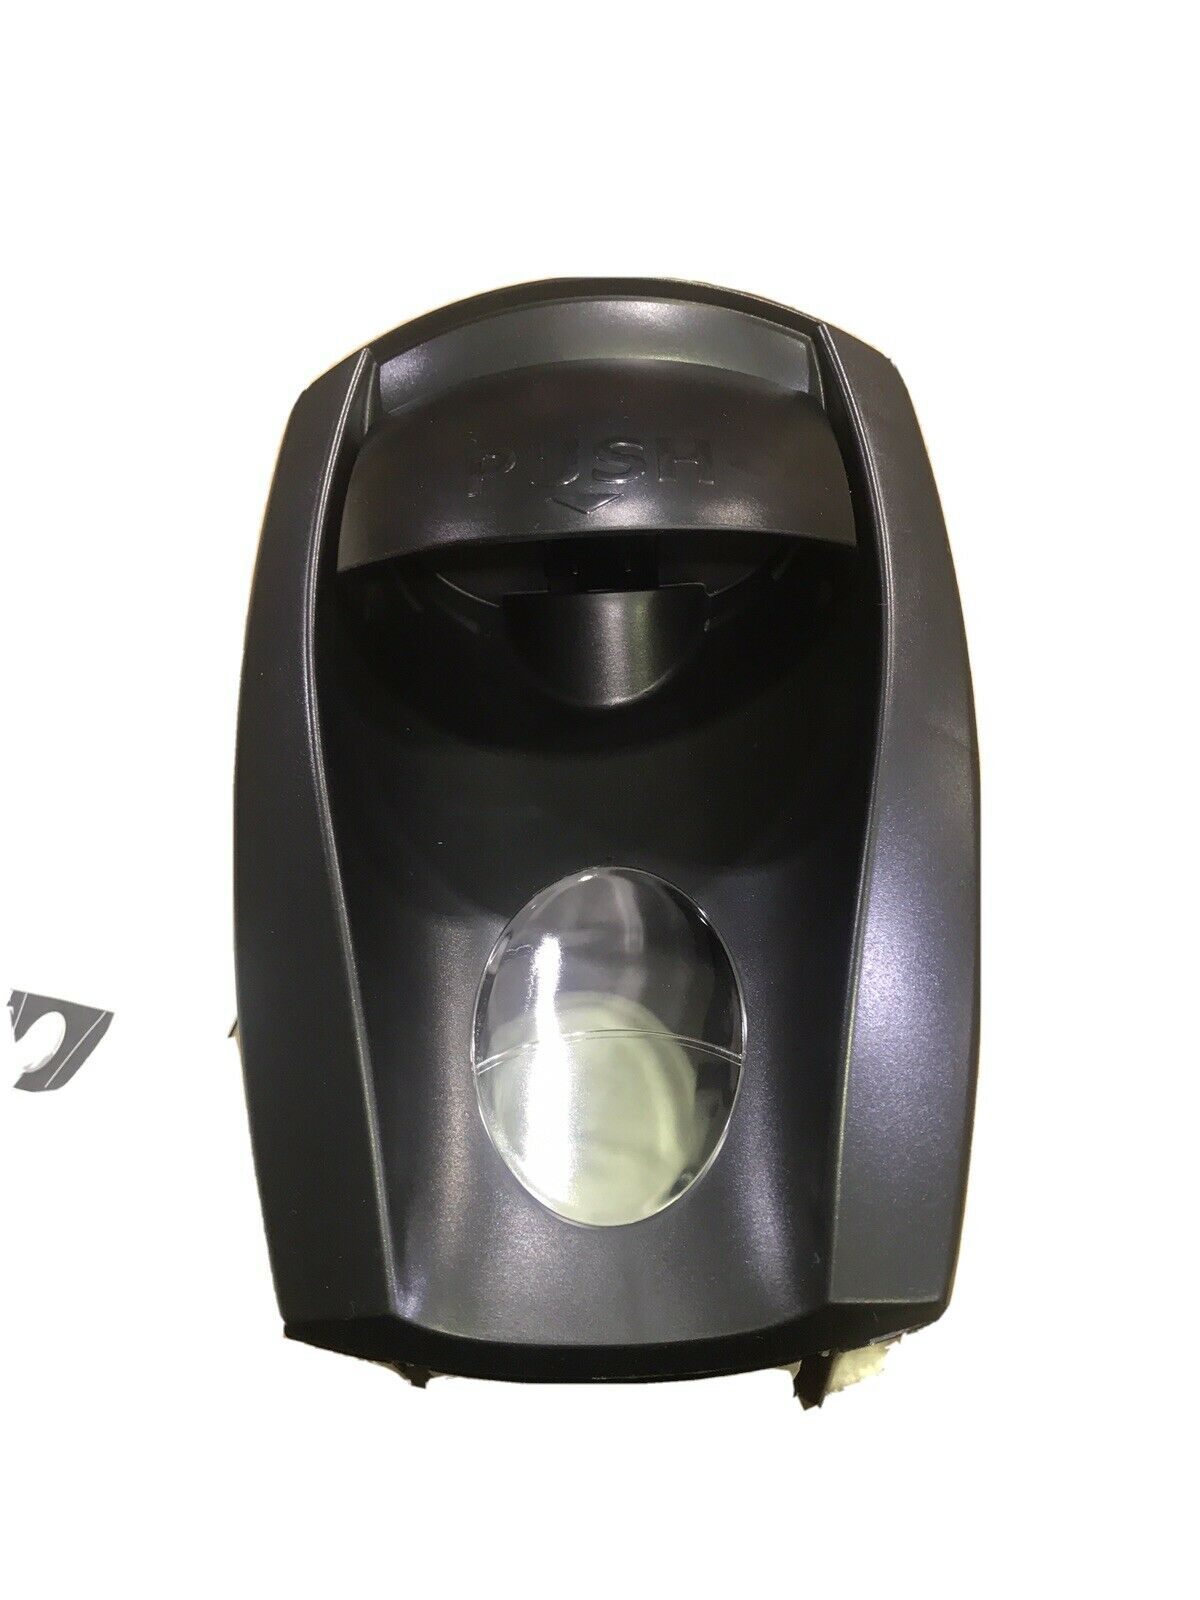 New U-line H-3905bl Foam Soap Dispenser Lot 6 Units Black